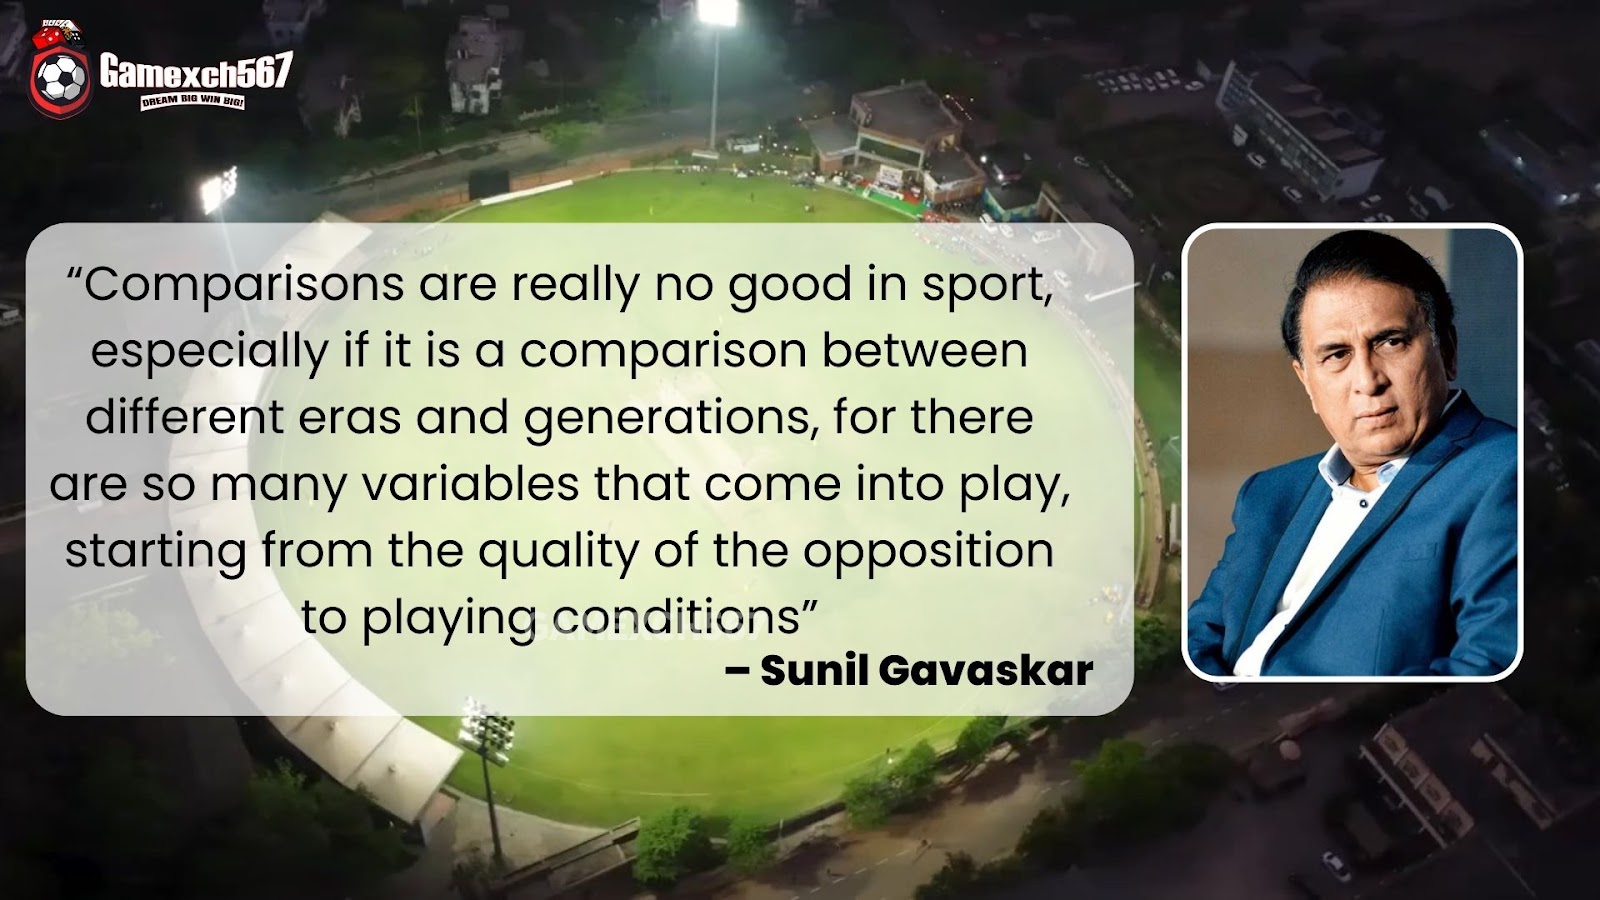 Quotes by cricketers - Sunil Gavaskar
